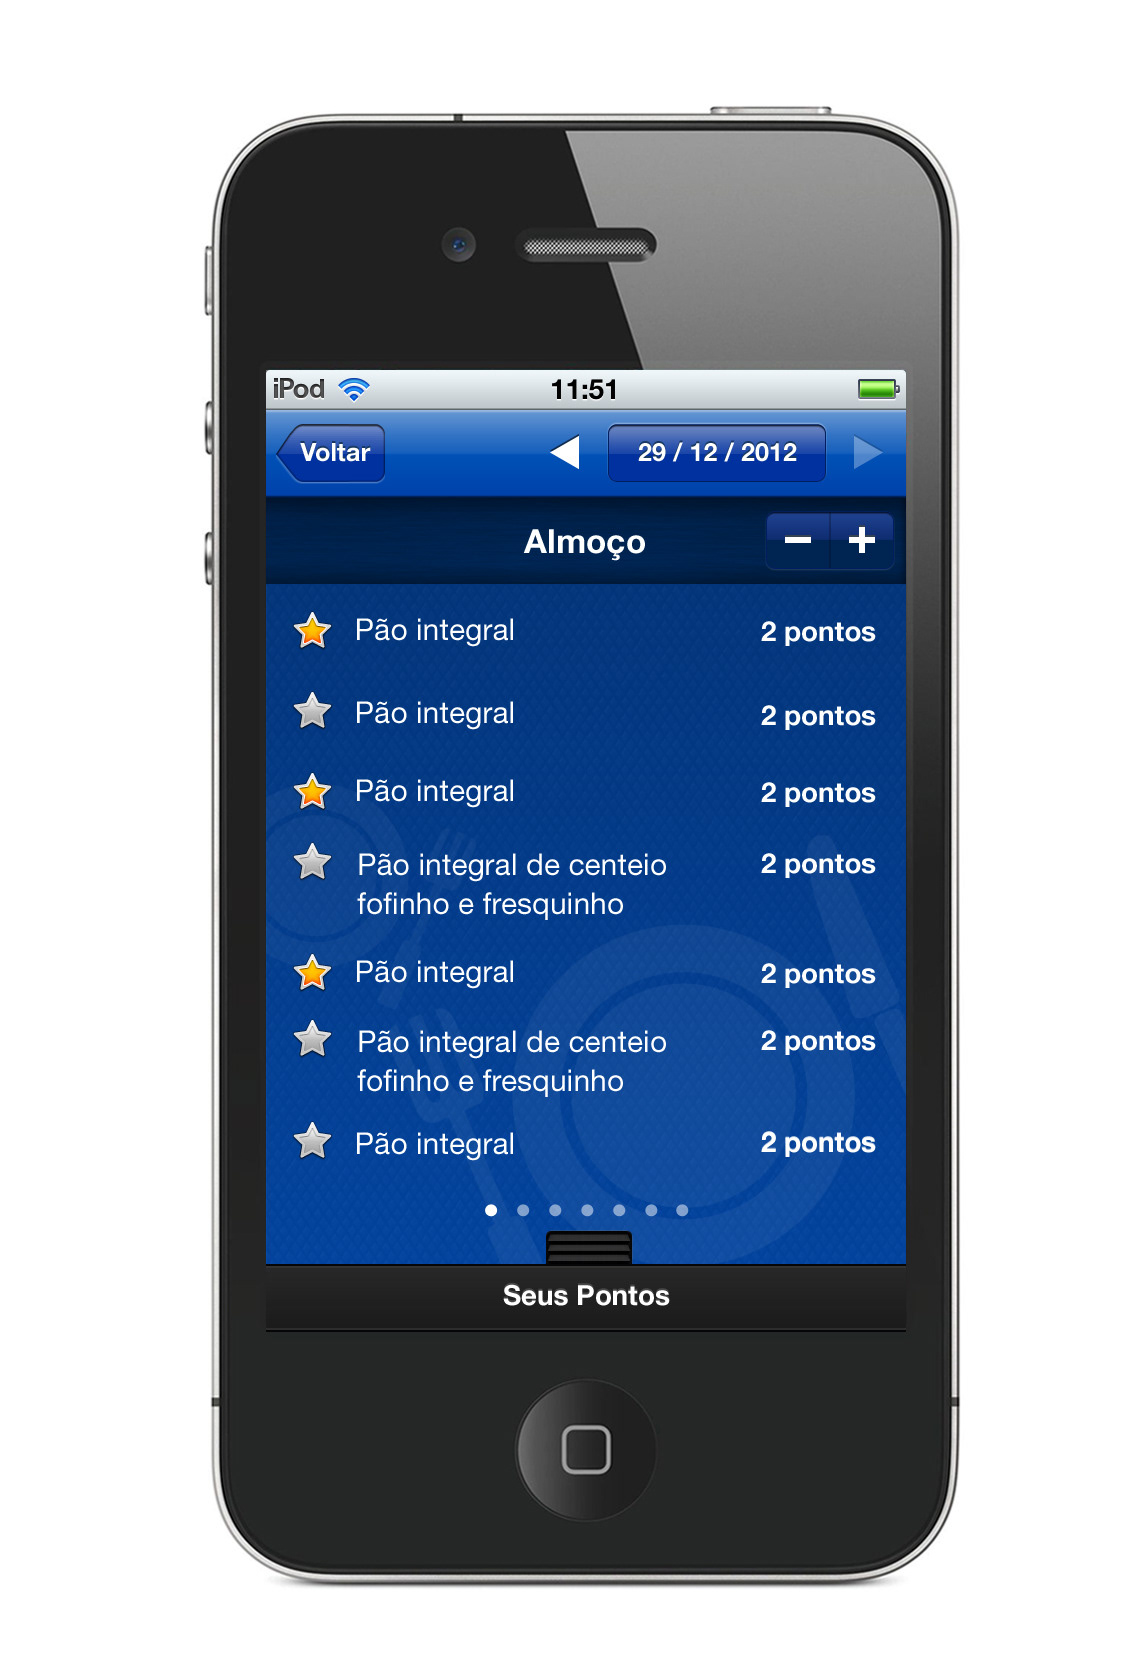 dieta e saude  health app  iphone  ipod